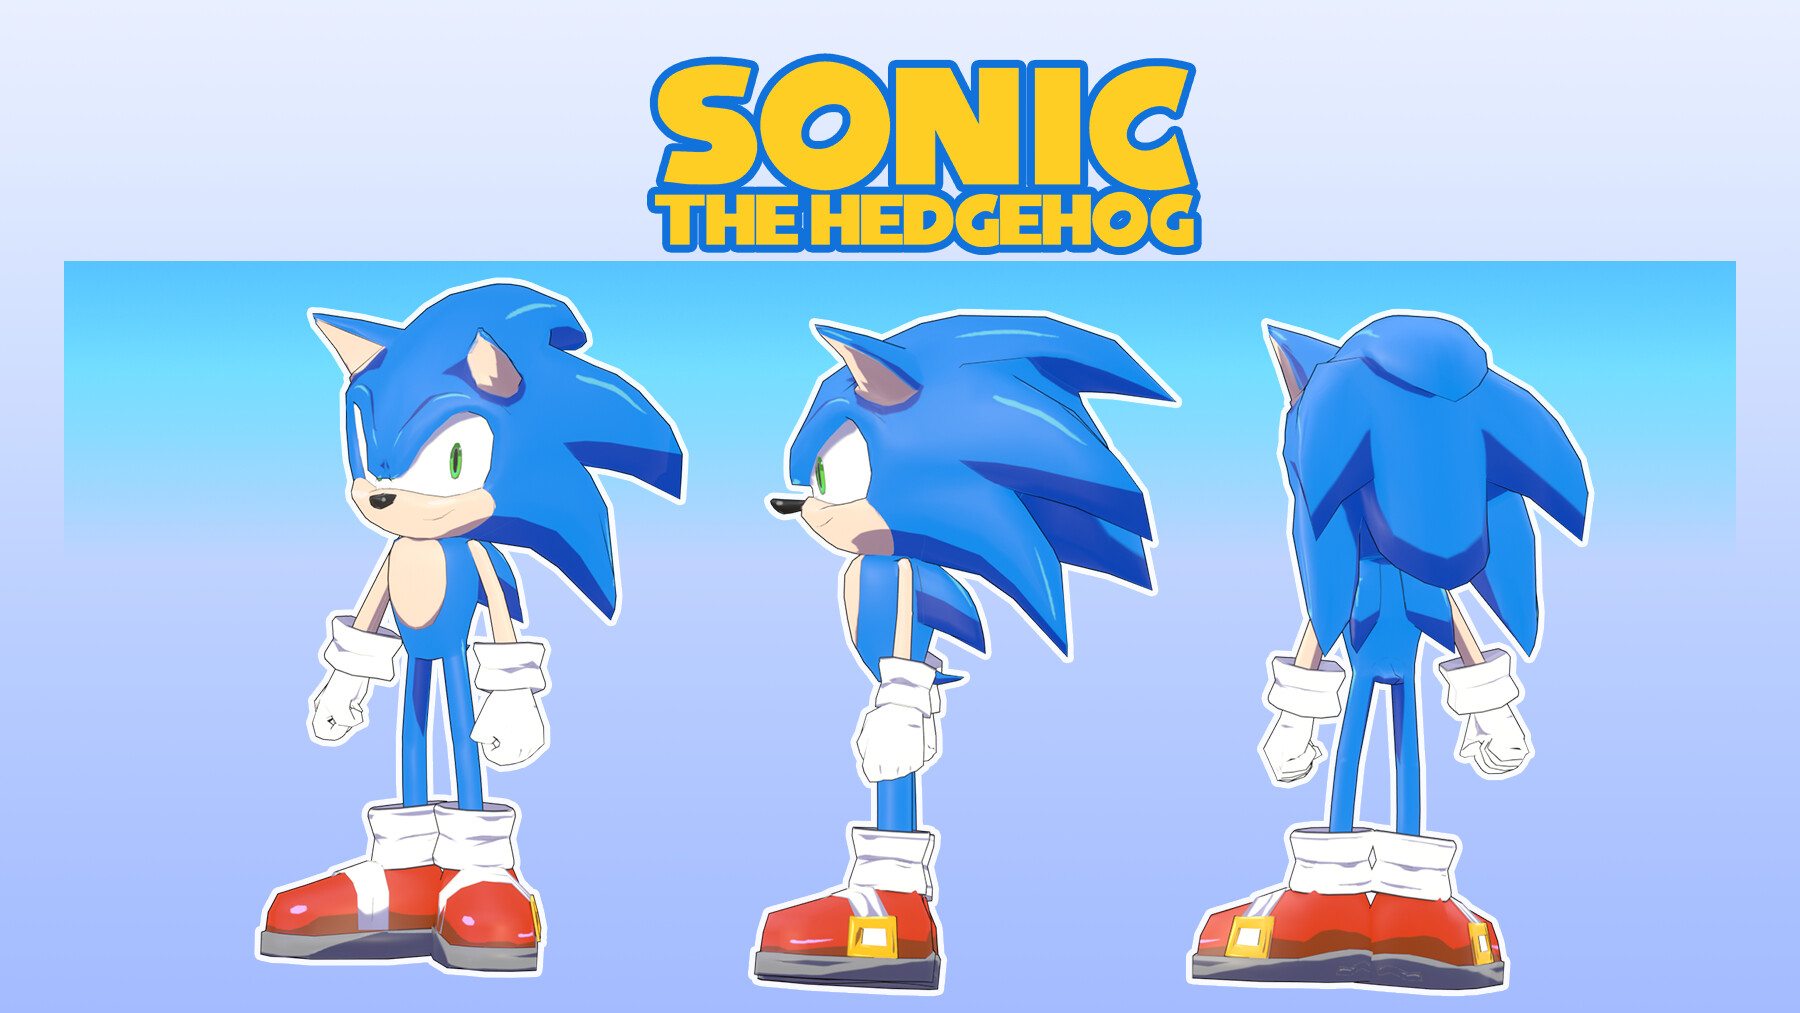 Darkspine Sonic The Hedgehog  Sonic the hedgehog, Sonic, Hedgehog game